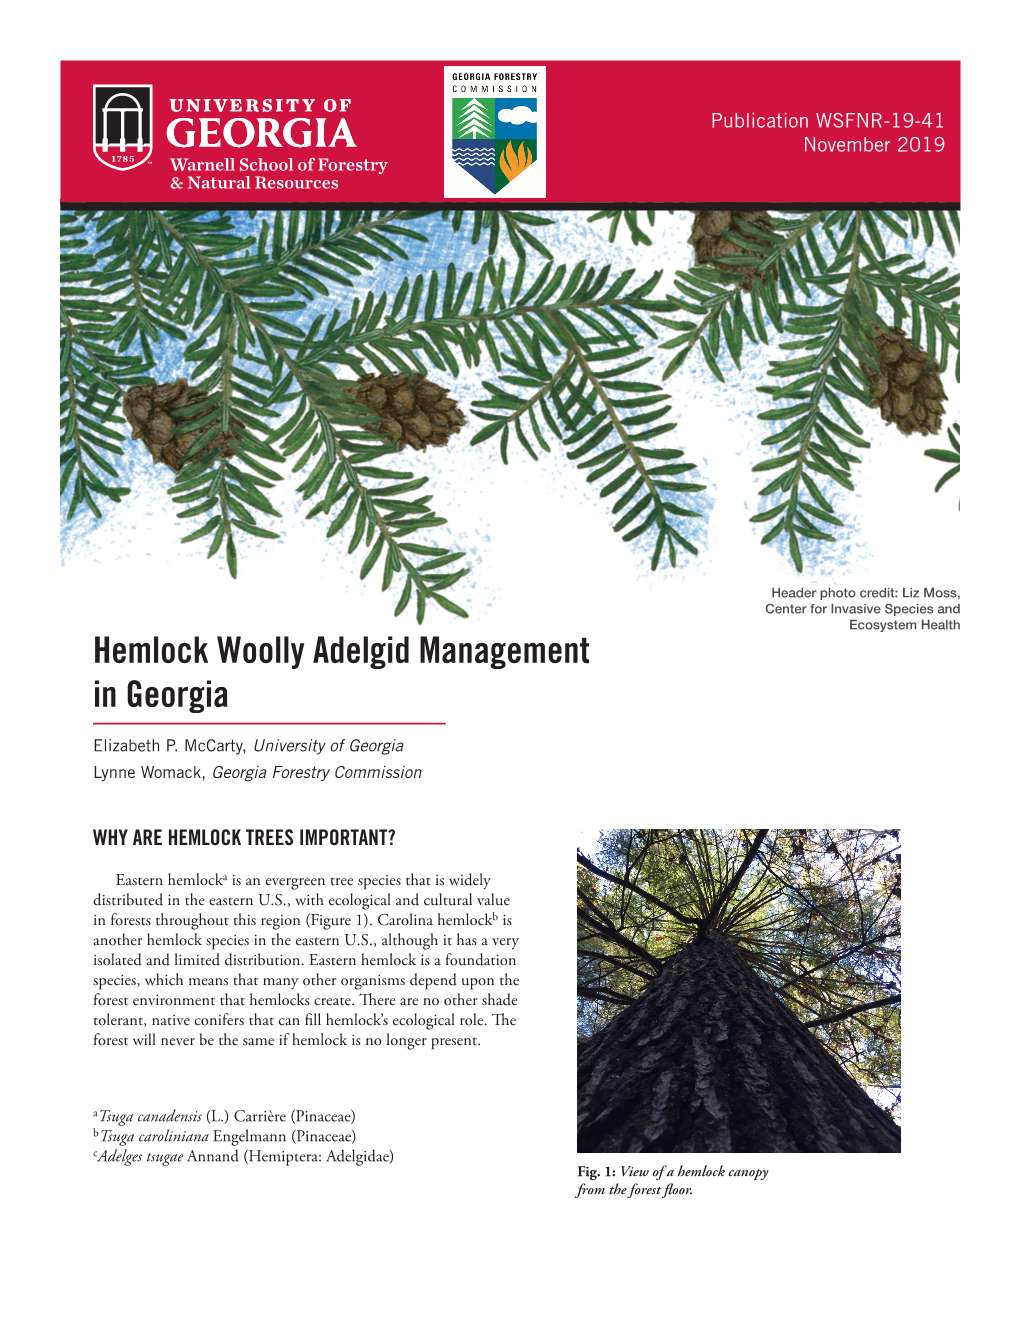 Hemlock Woolly Adelgid Management in Georgia